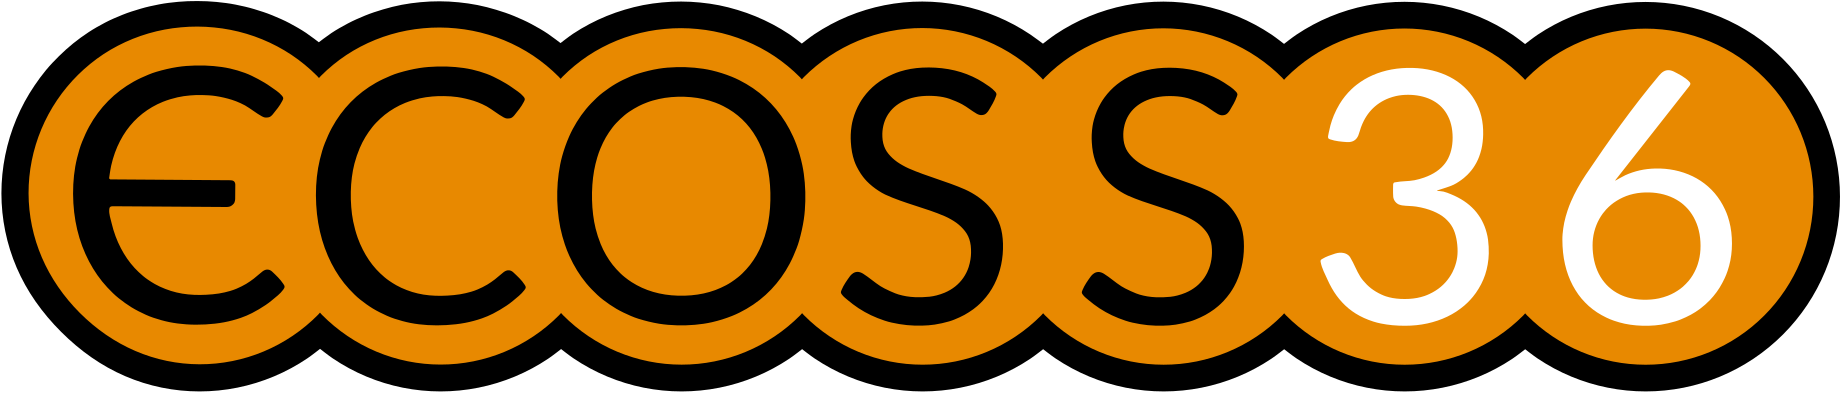 logo ECOSS-36